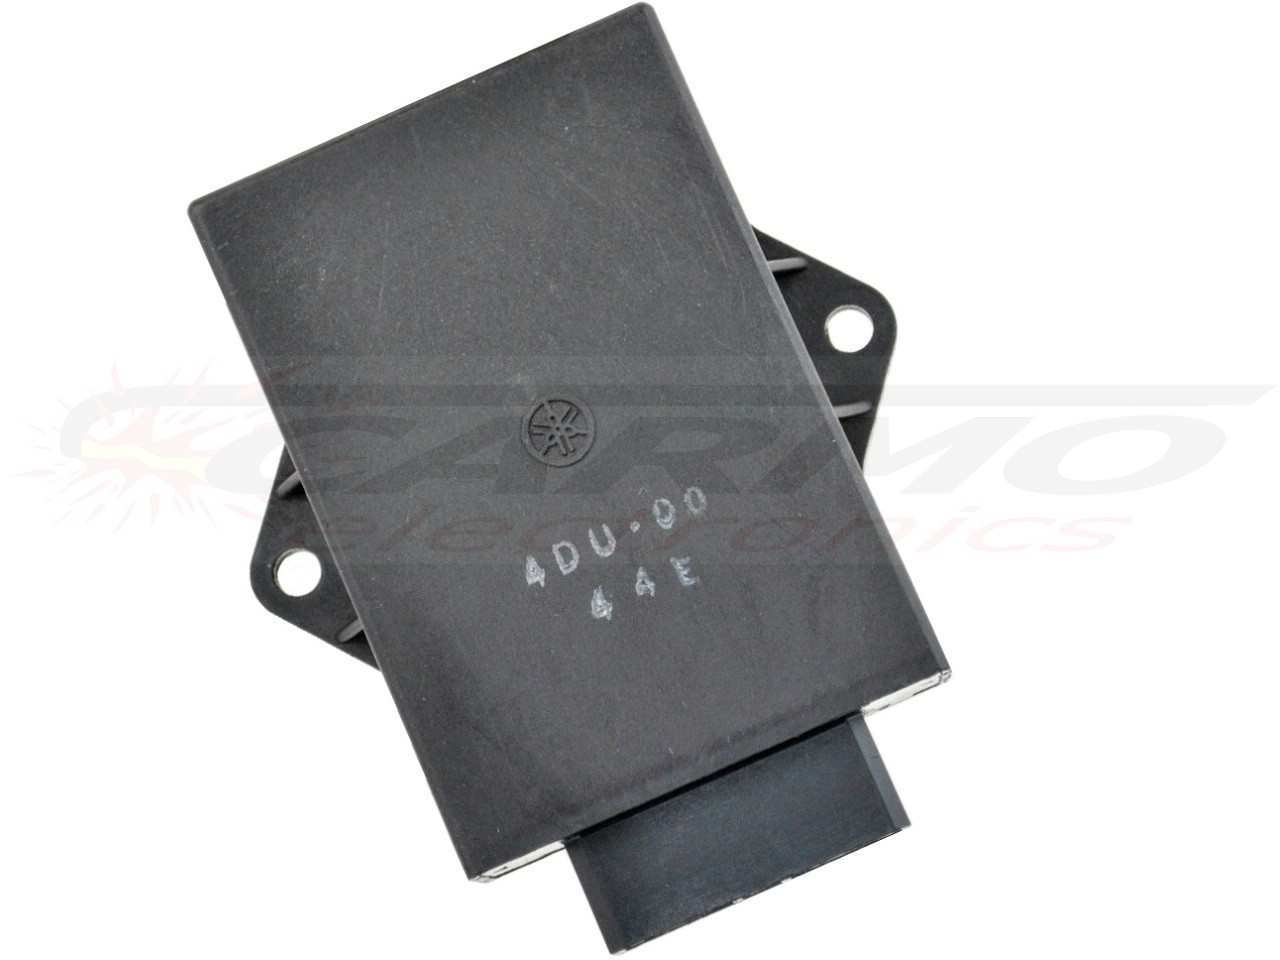 XJ600 Seca TCI CDI dispositif de commande boîte noire (4DU-00)